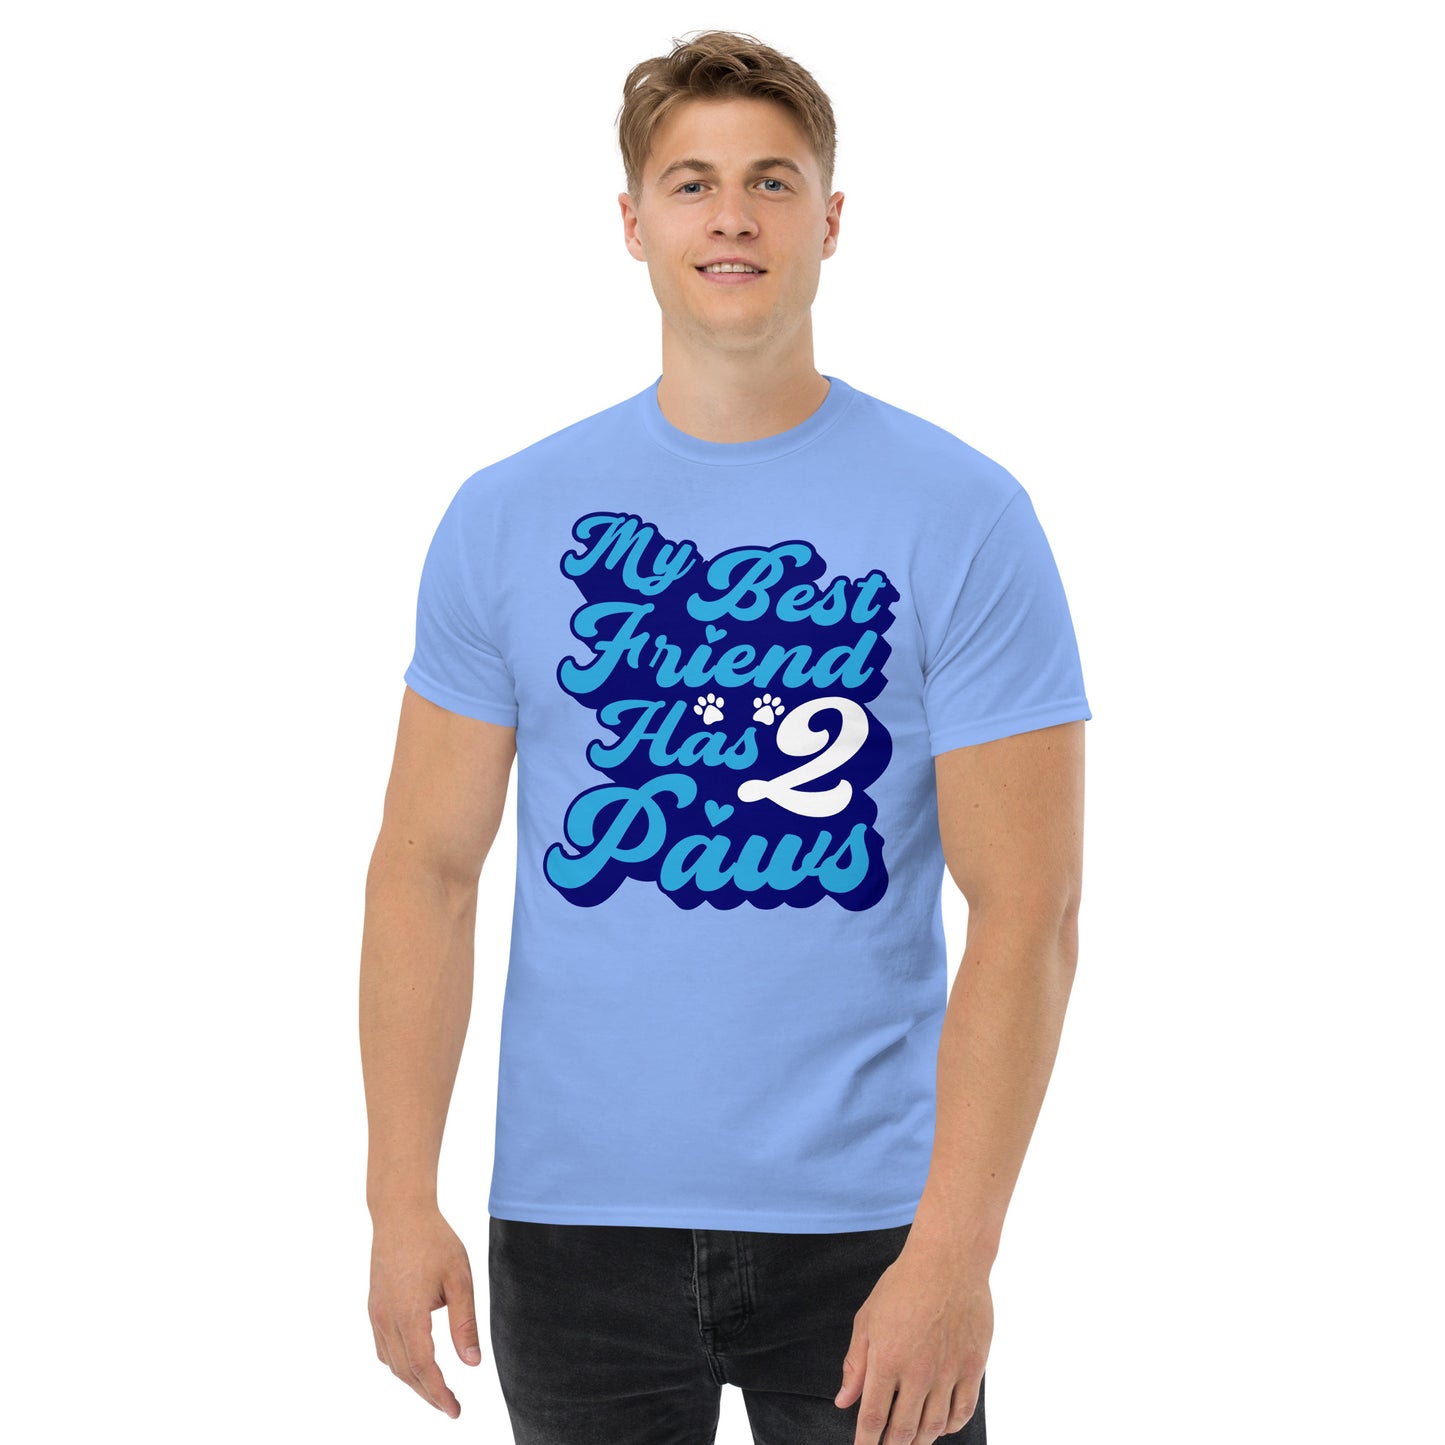 My best friend has 2 Paws men’s t-shirts by Dog Artistry carolina blue